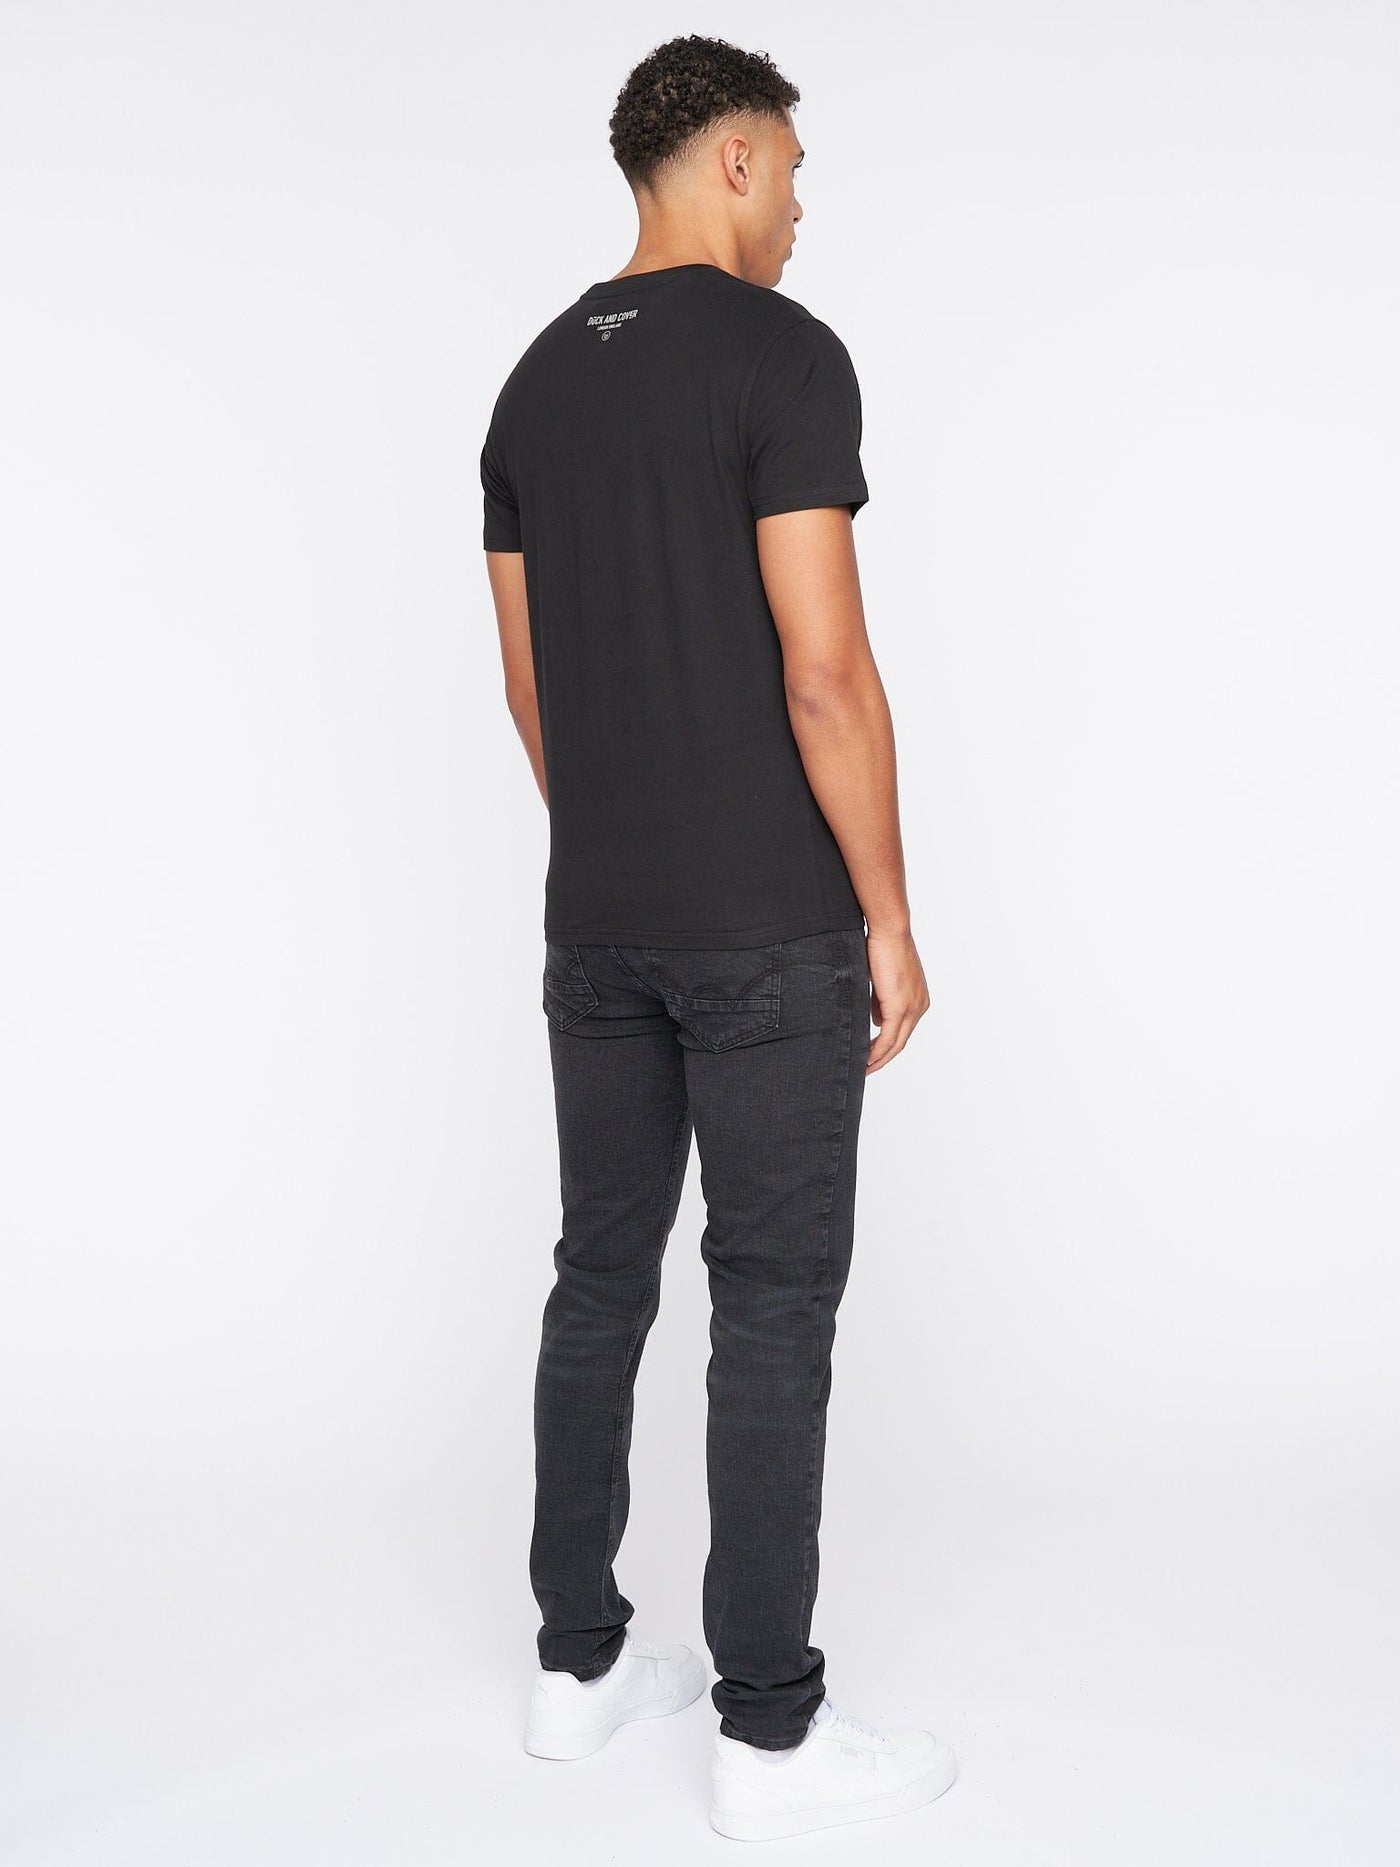 Camotown T-shirt Black